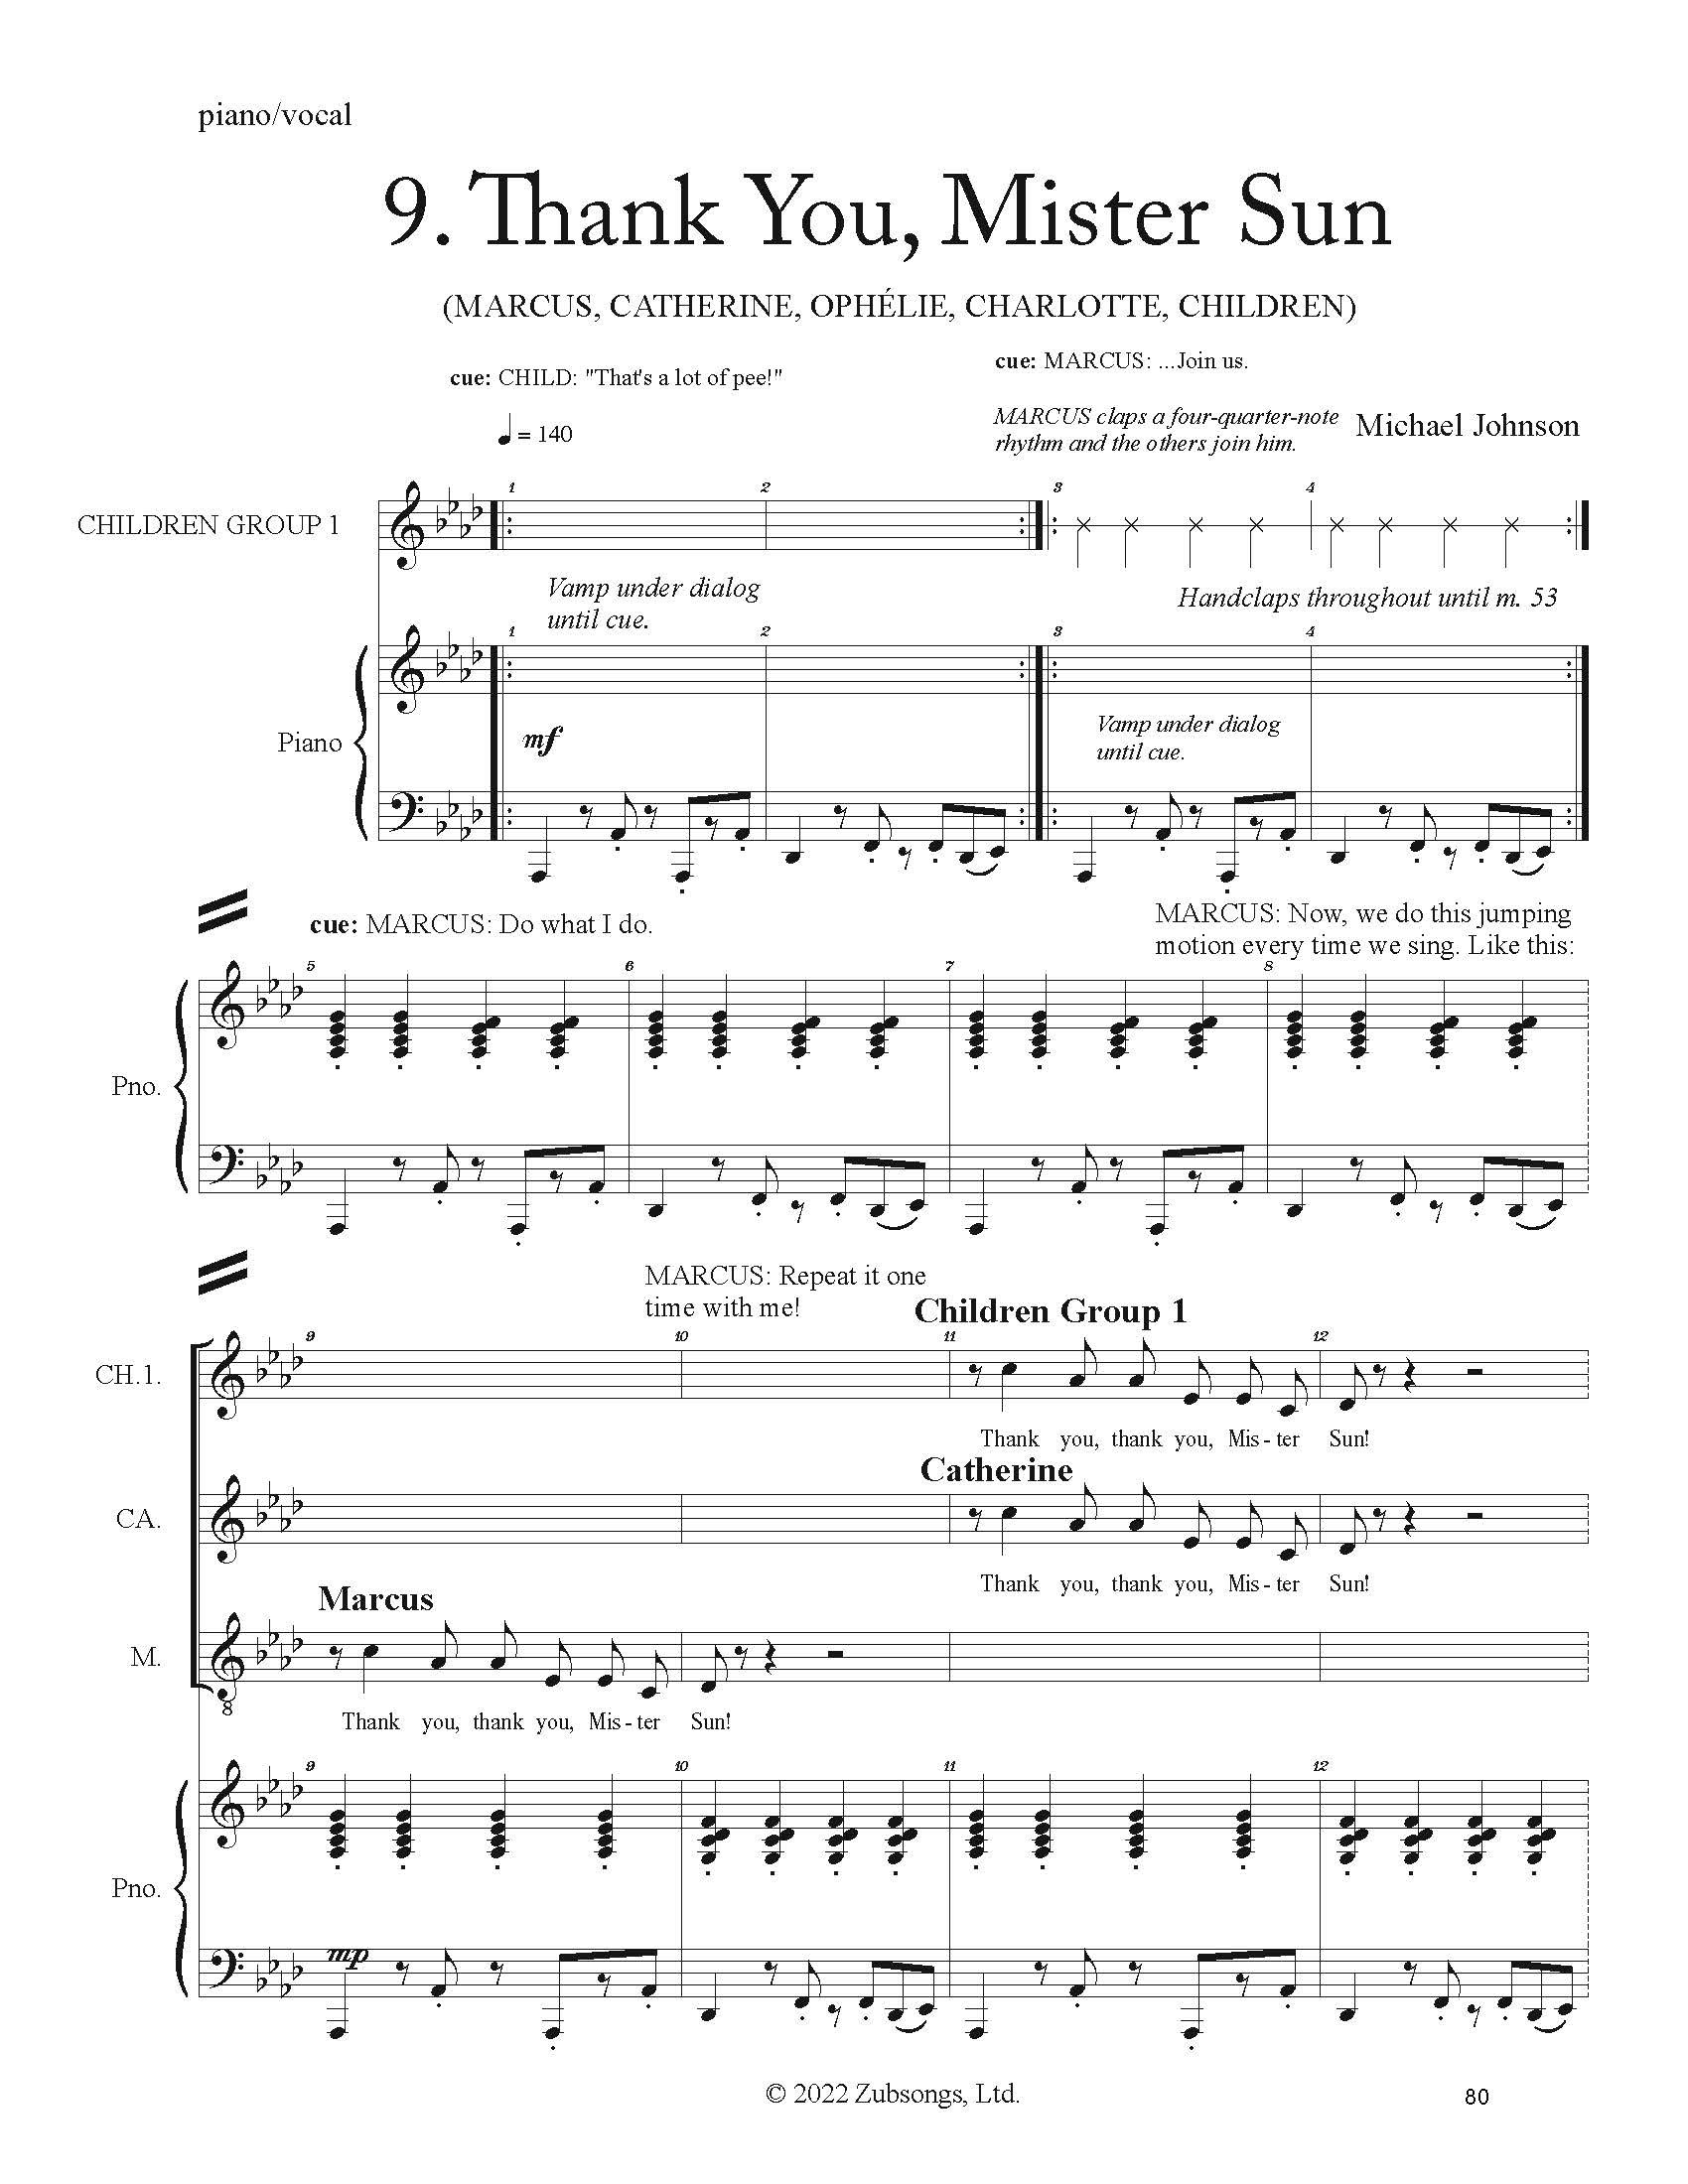 FULL PIANO VOCAL SCORE DRAFT 1 - Score_Page_080.jpg